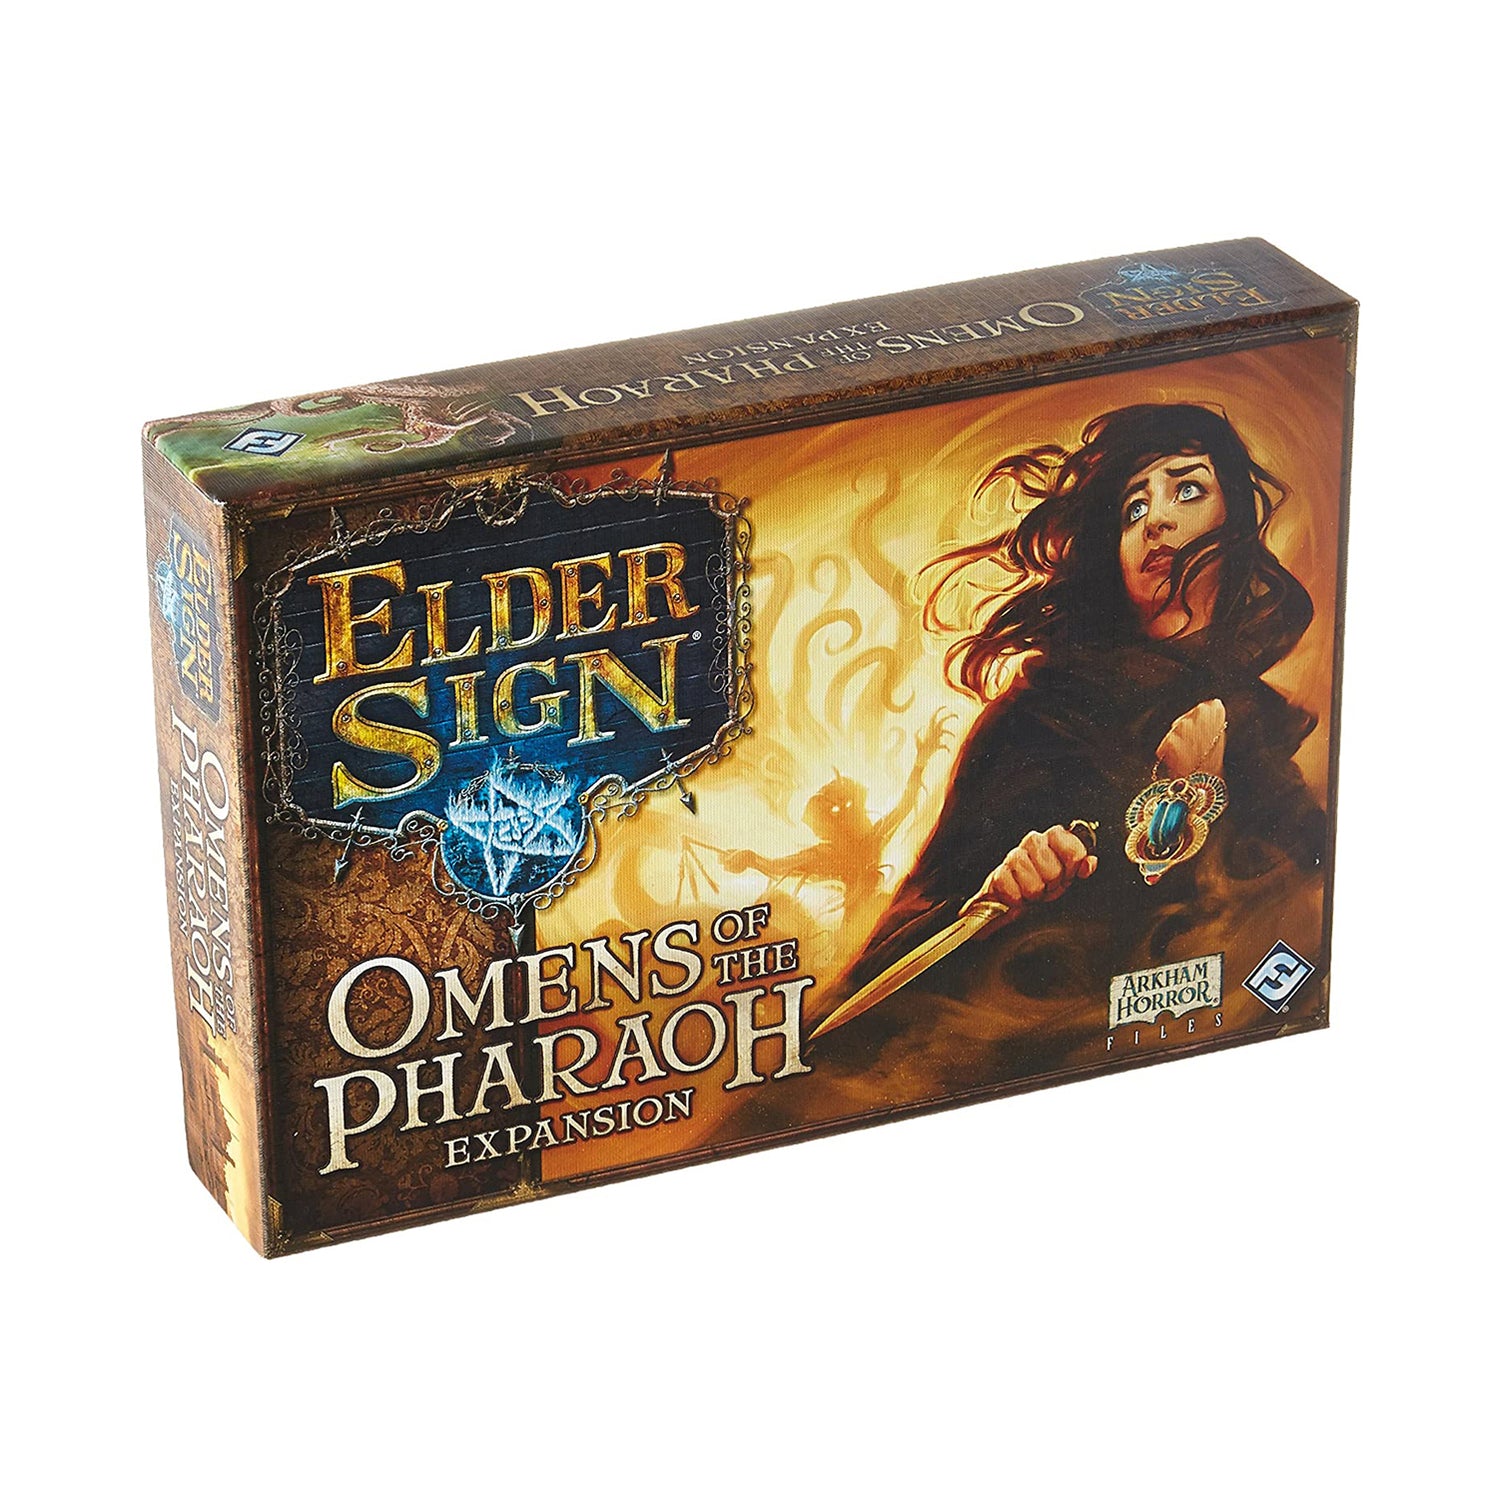 elder sign omens game